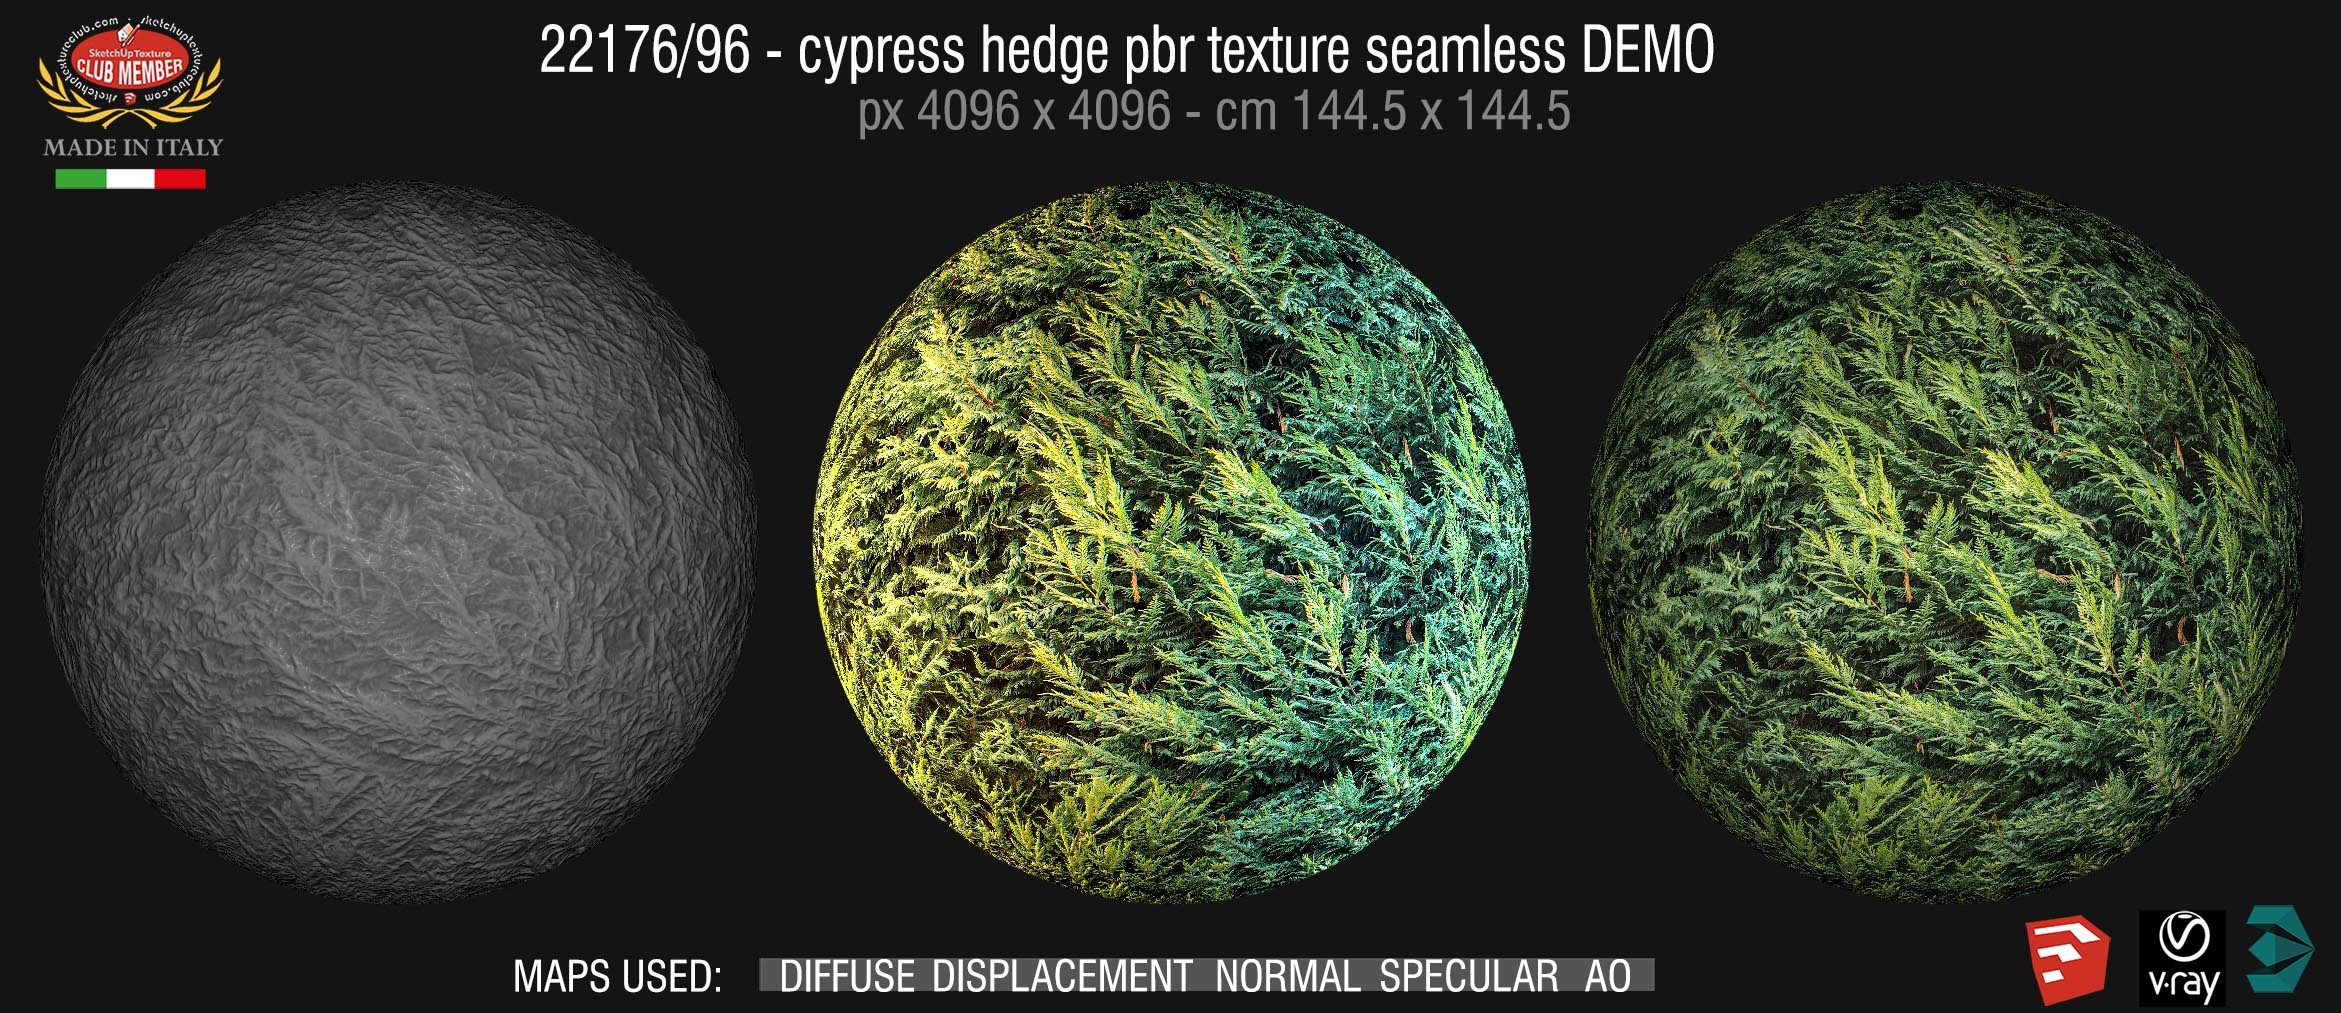 22176/96 Cypress hedge PBR texture seamless DEMO